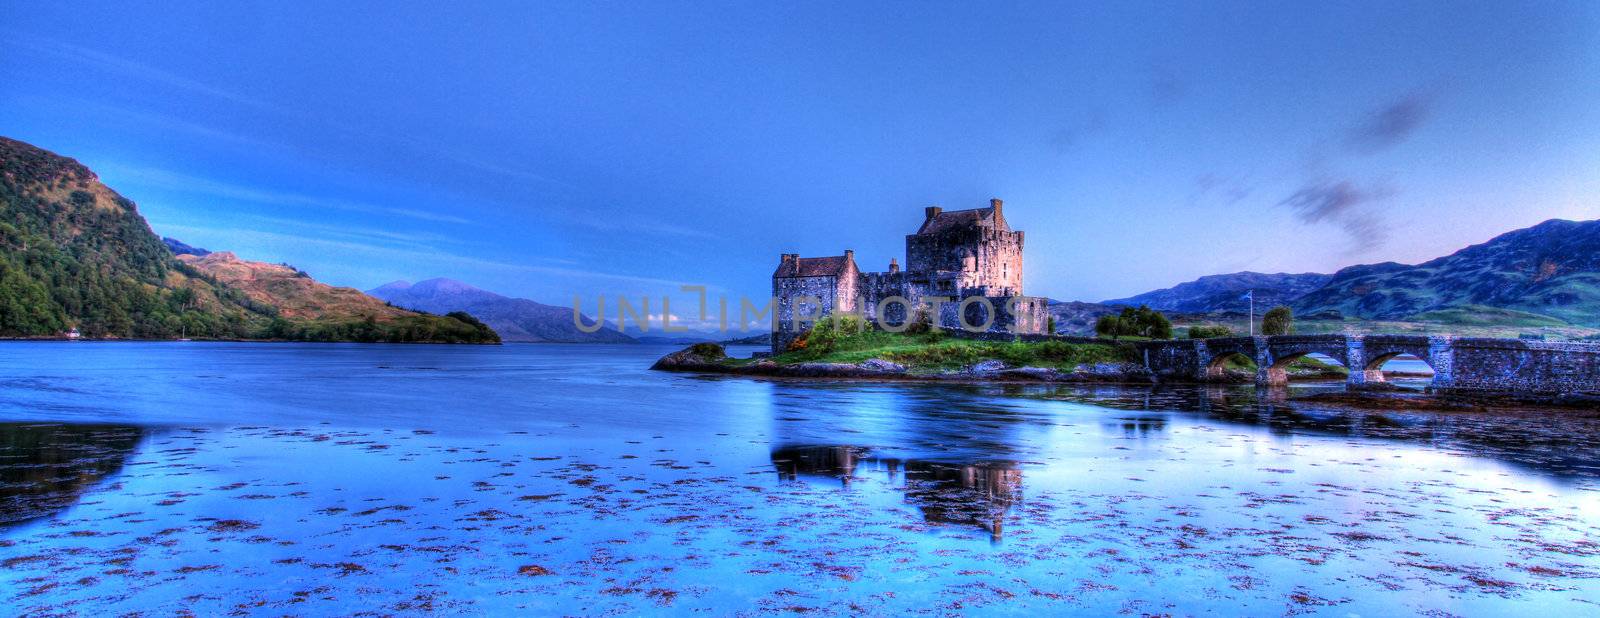 Eilan Donan Castle at sunset by olliemt